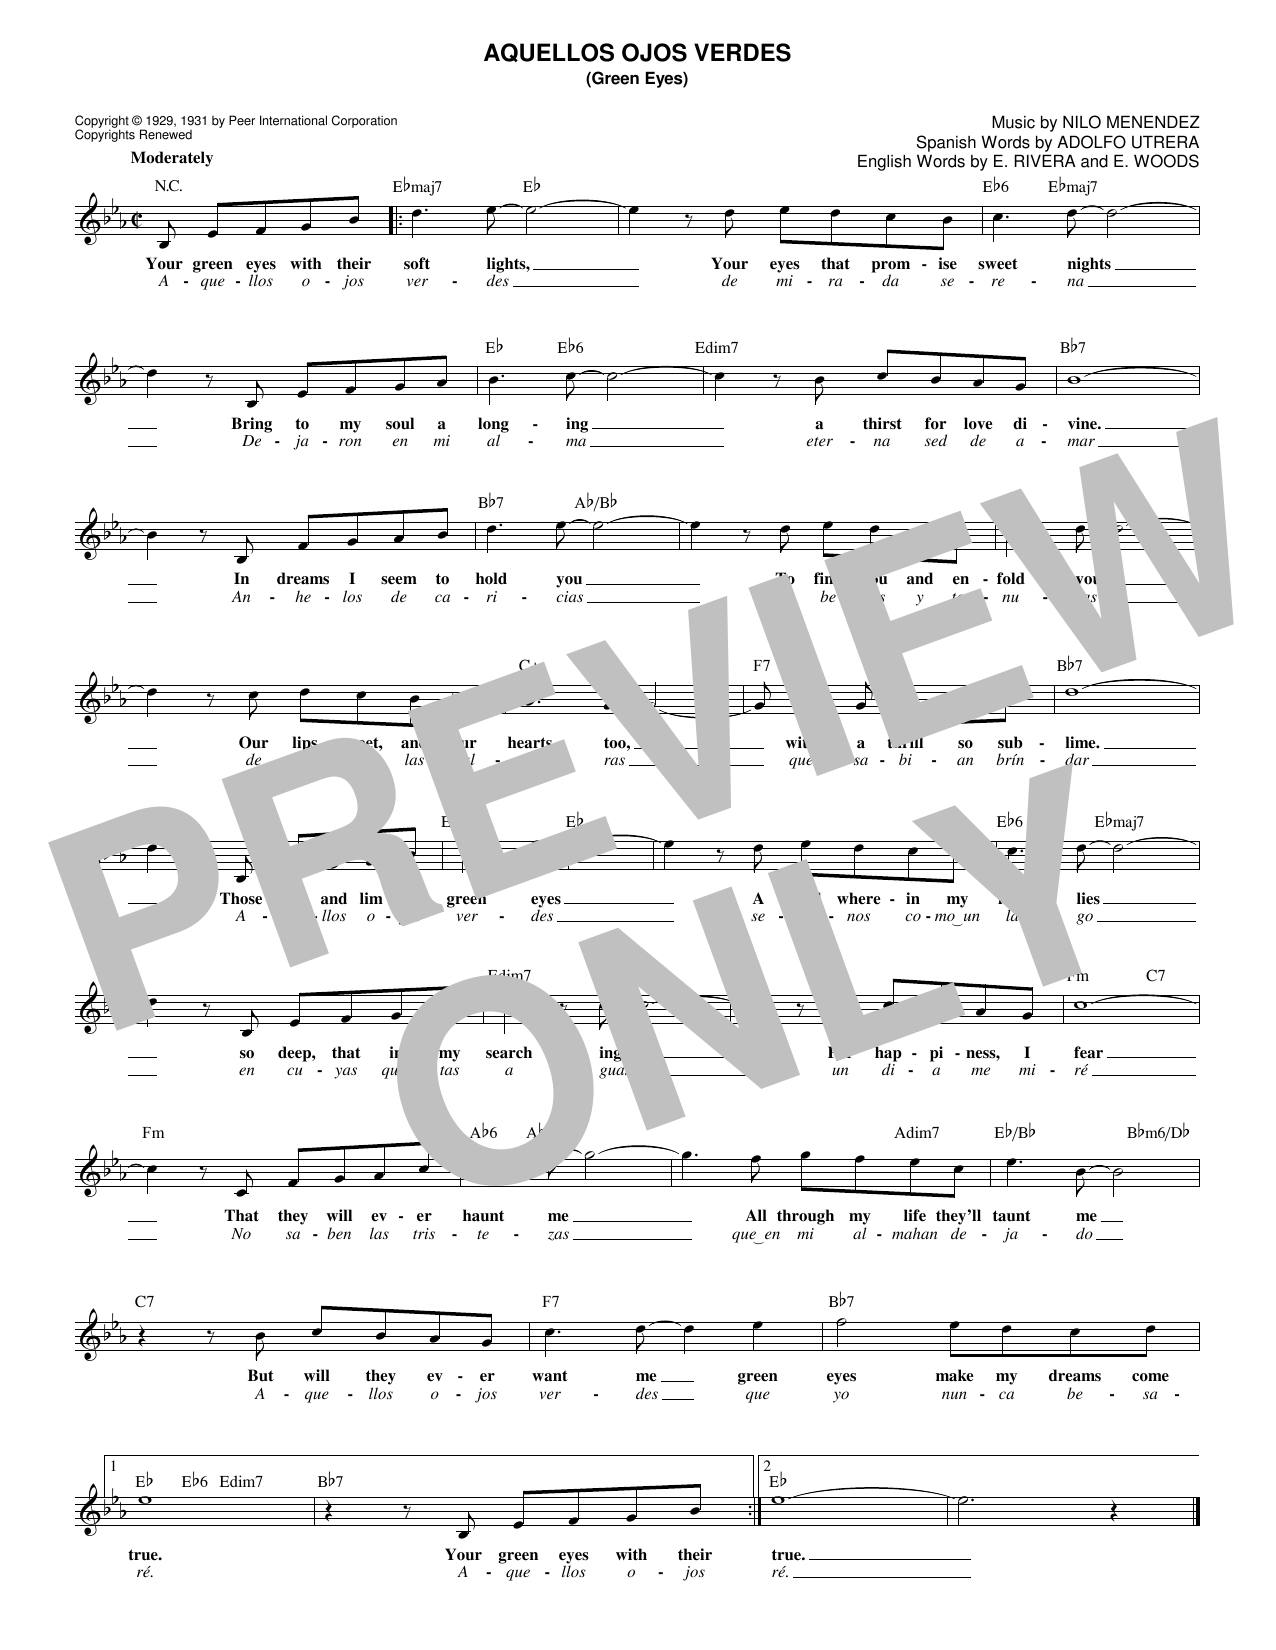 Jimmy Dorsey Aquellos Ojos Verdes (Green Eyes) Sheet Music Notes & Chords for Ukulele - Download or Print PDF